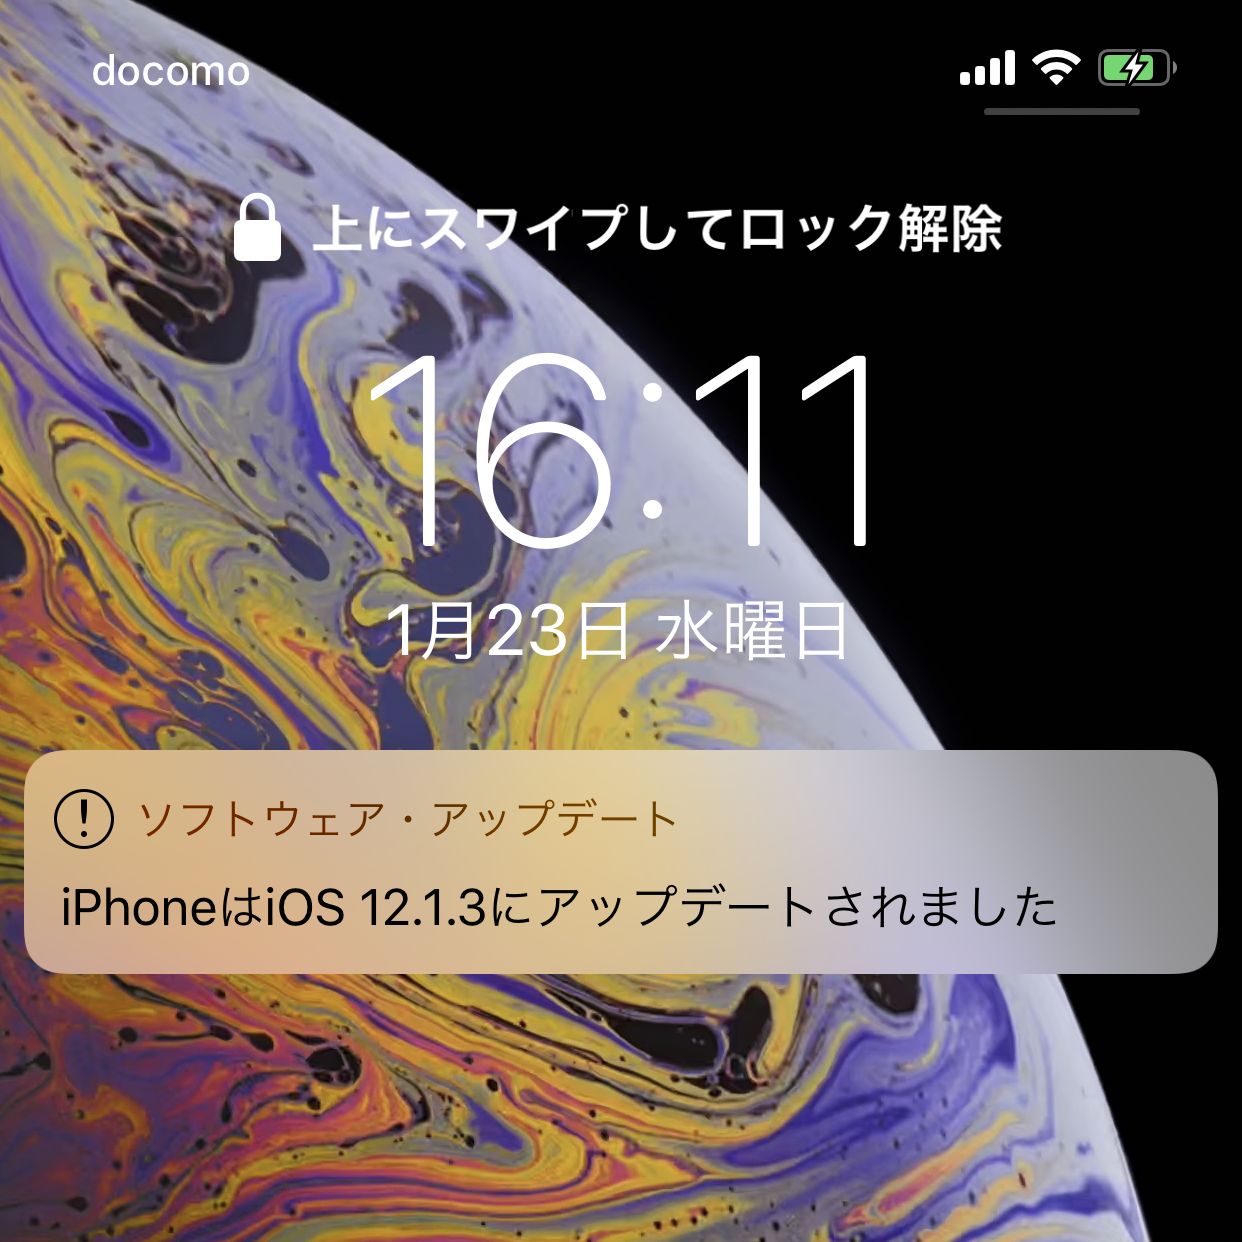 iPhoneとiPadをiOS 12.1.3にアップデート